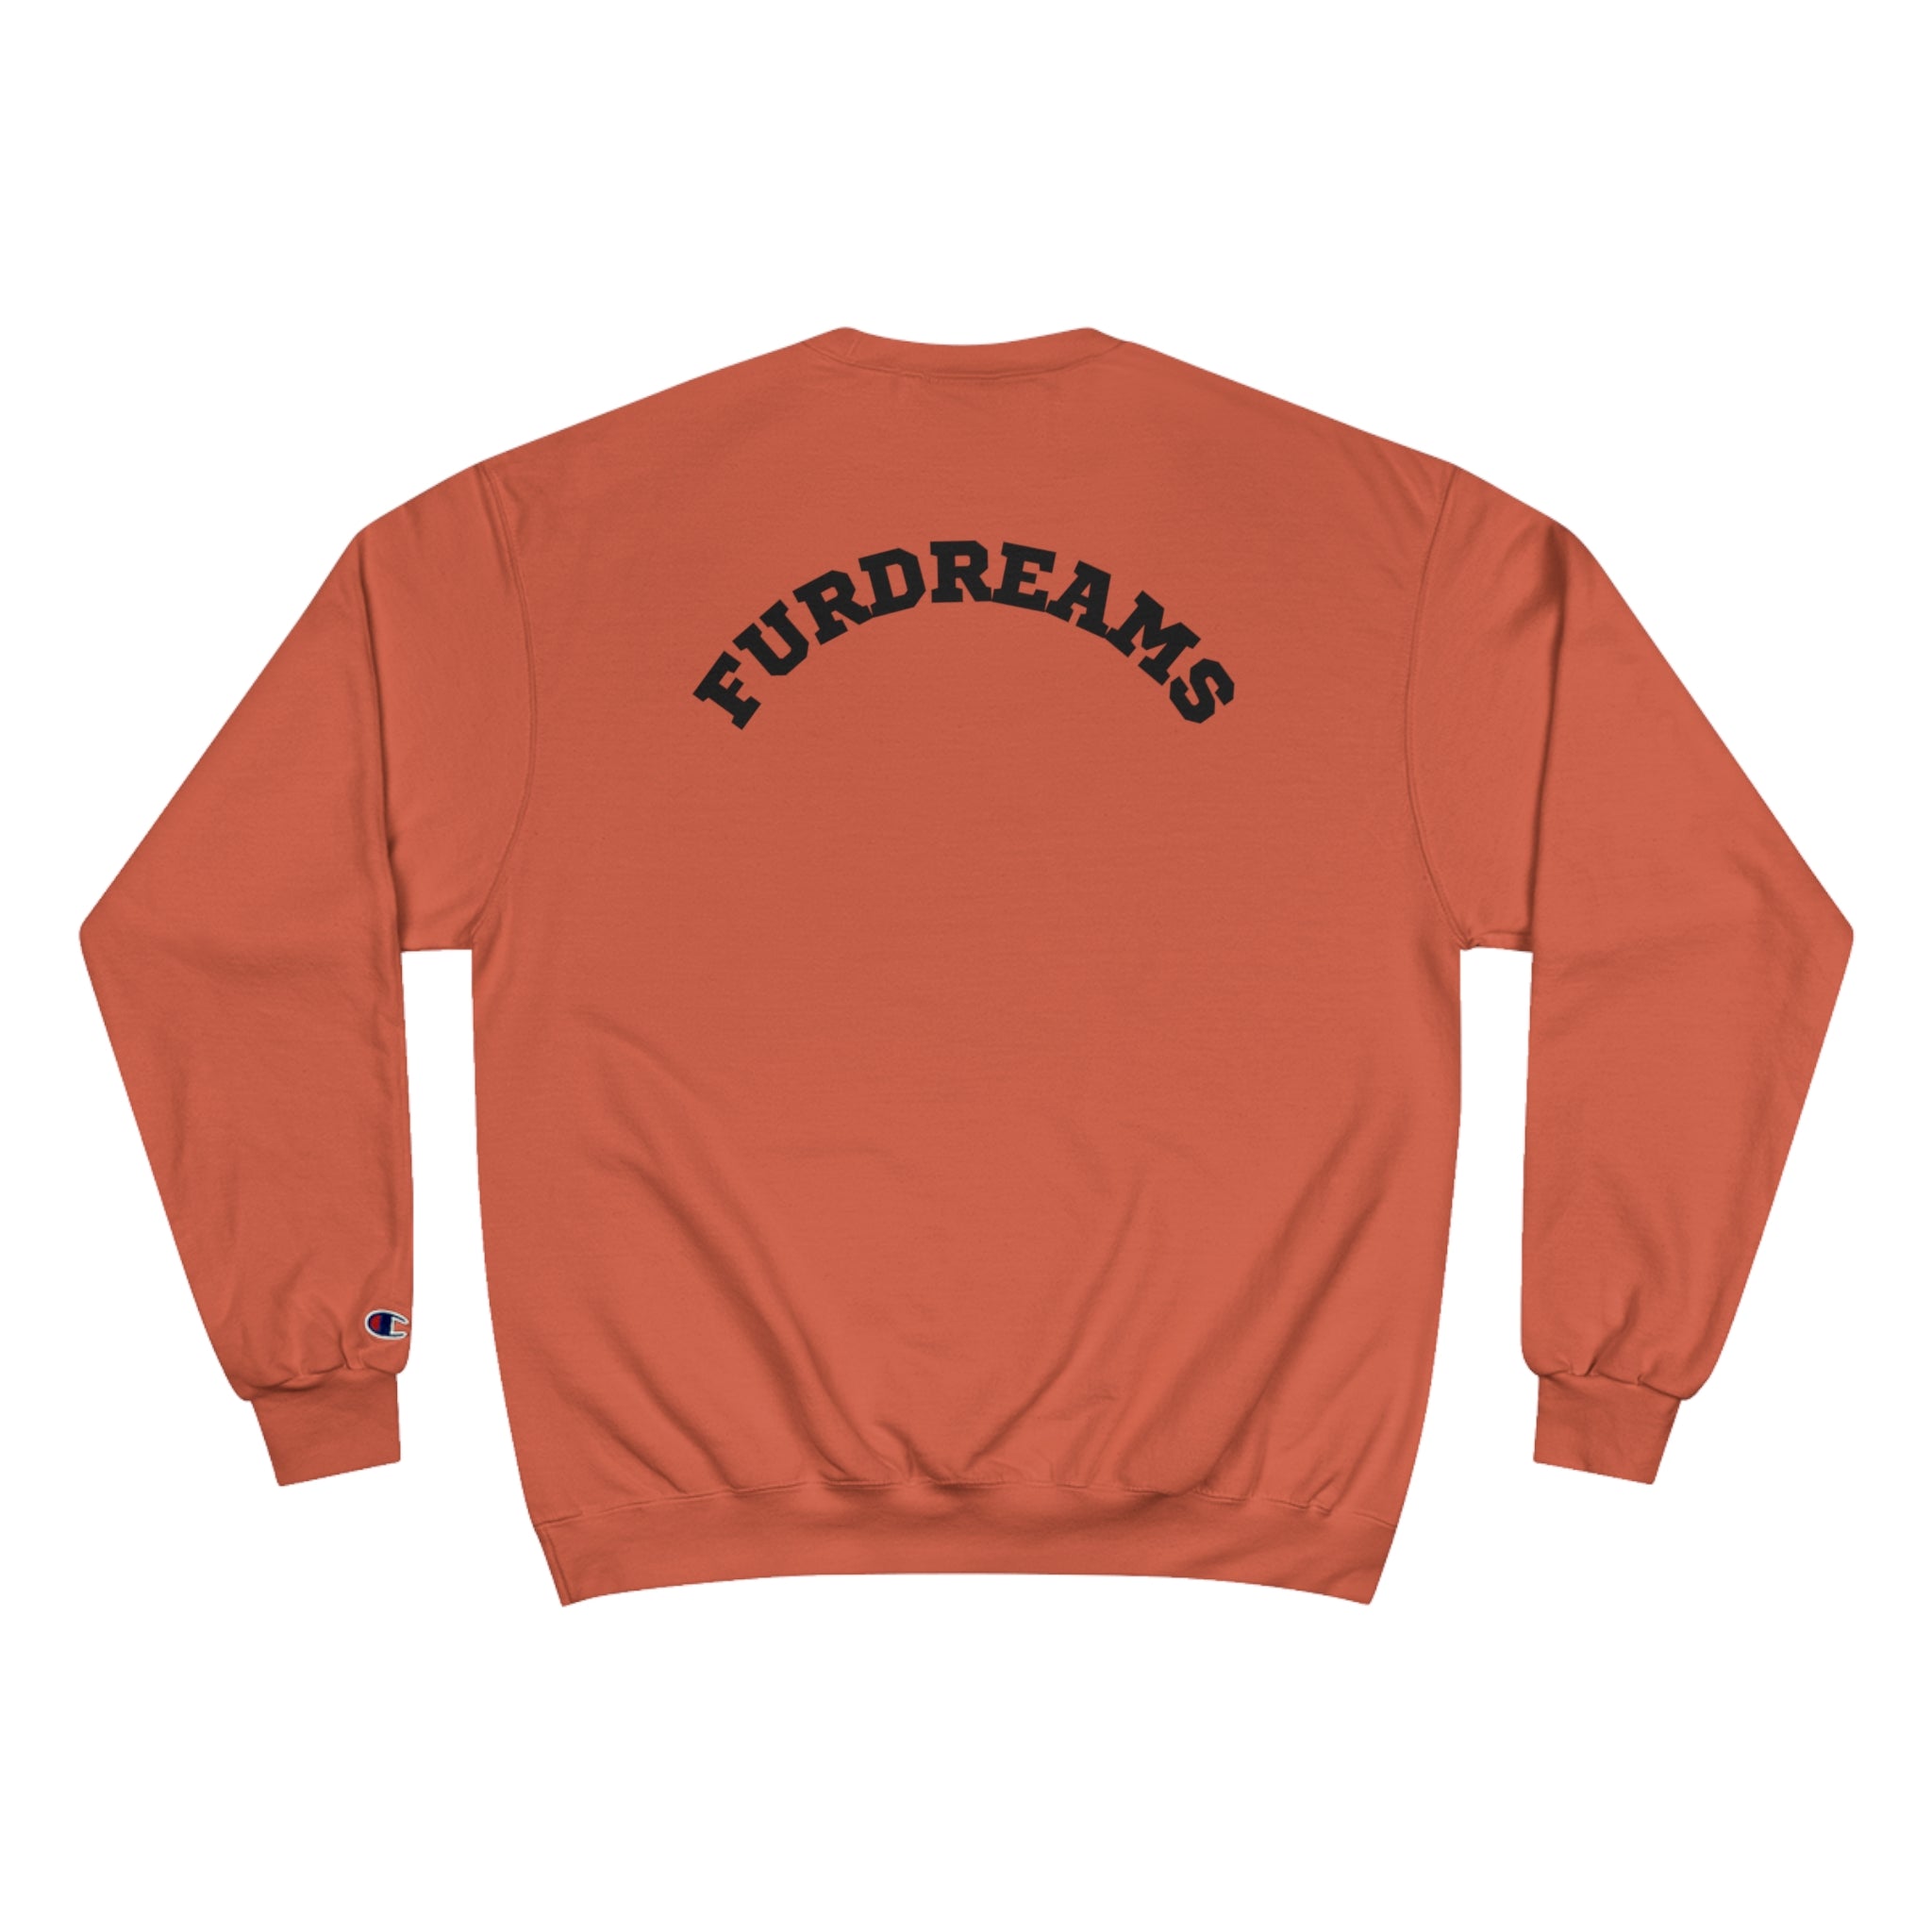 FURDreams “WAS” IV Champion Sweatshirt